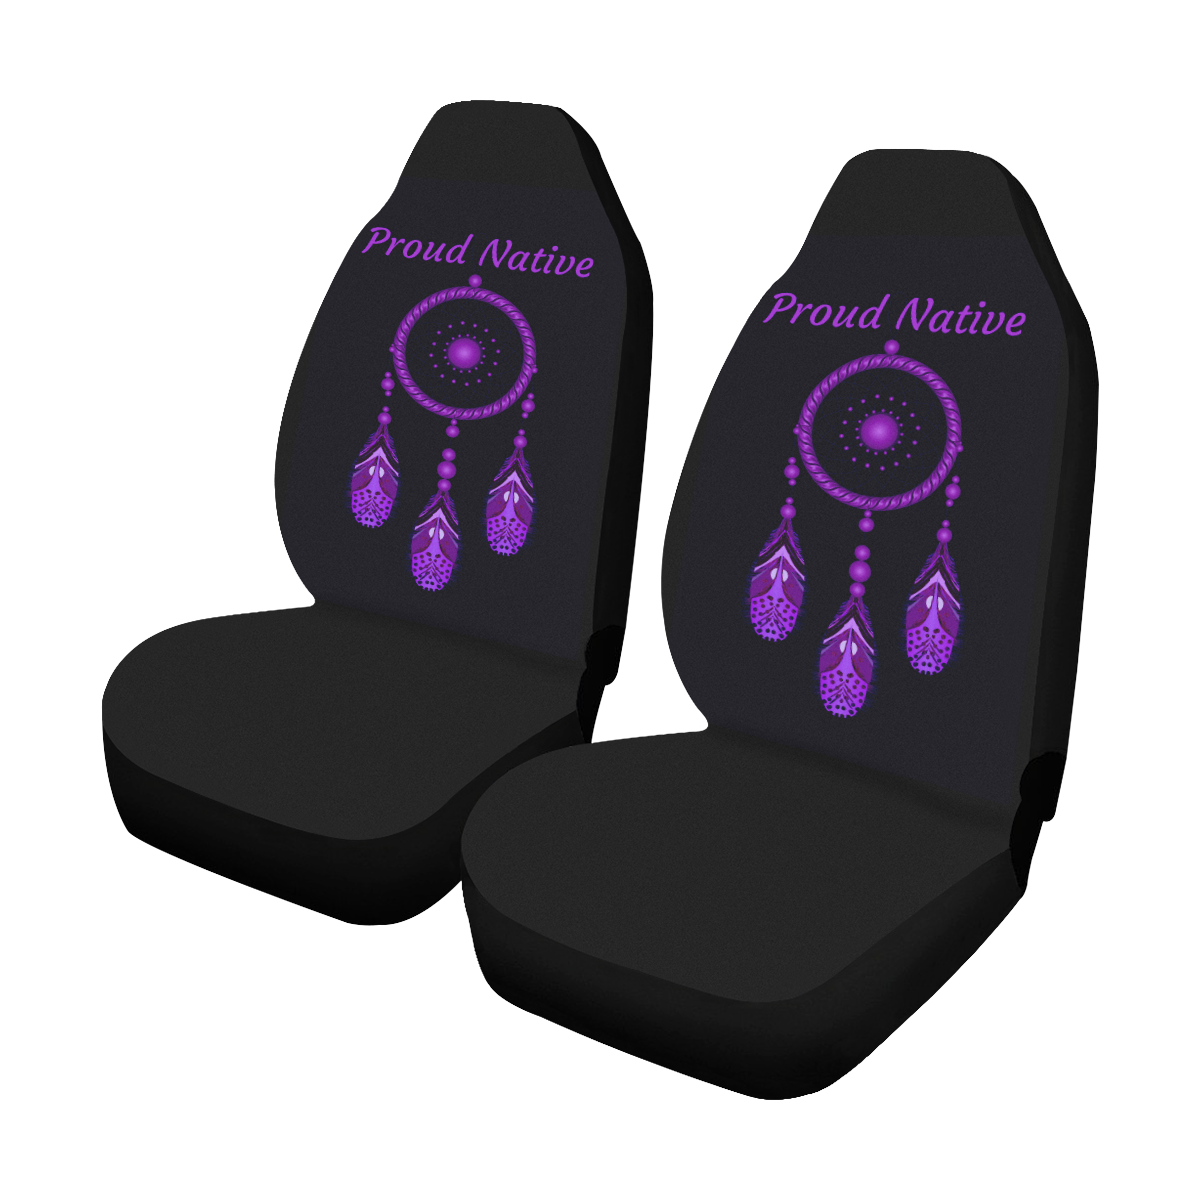 Purple Proud Native Dreamcatcher Car Seat Covers (Set of 2)